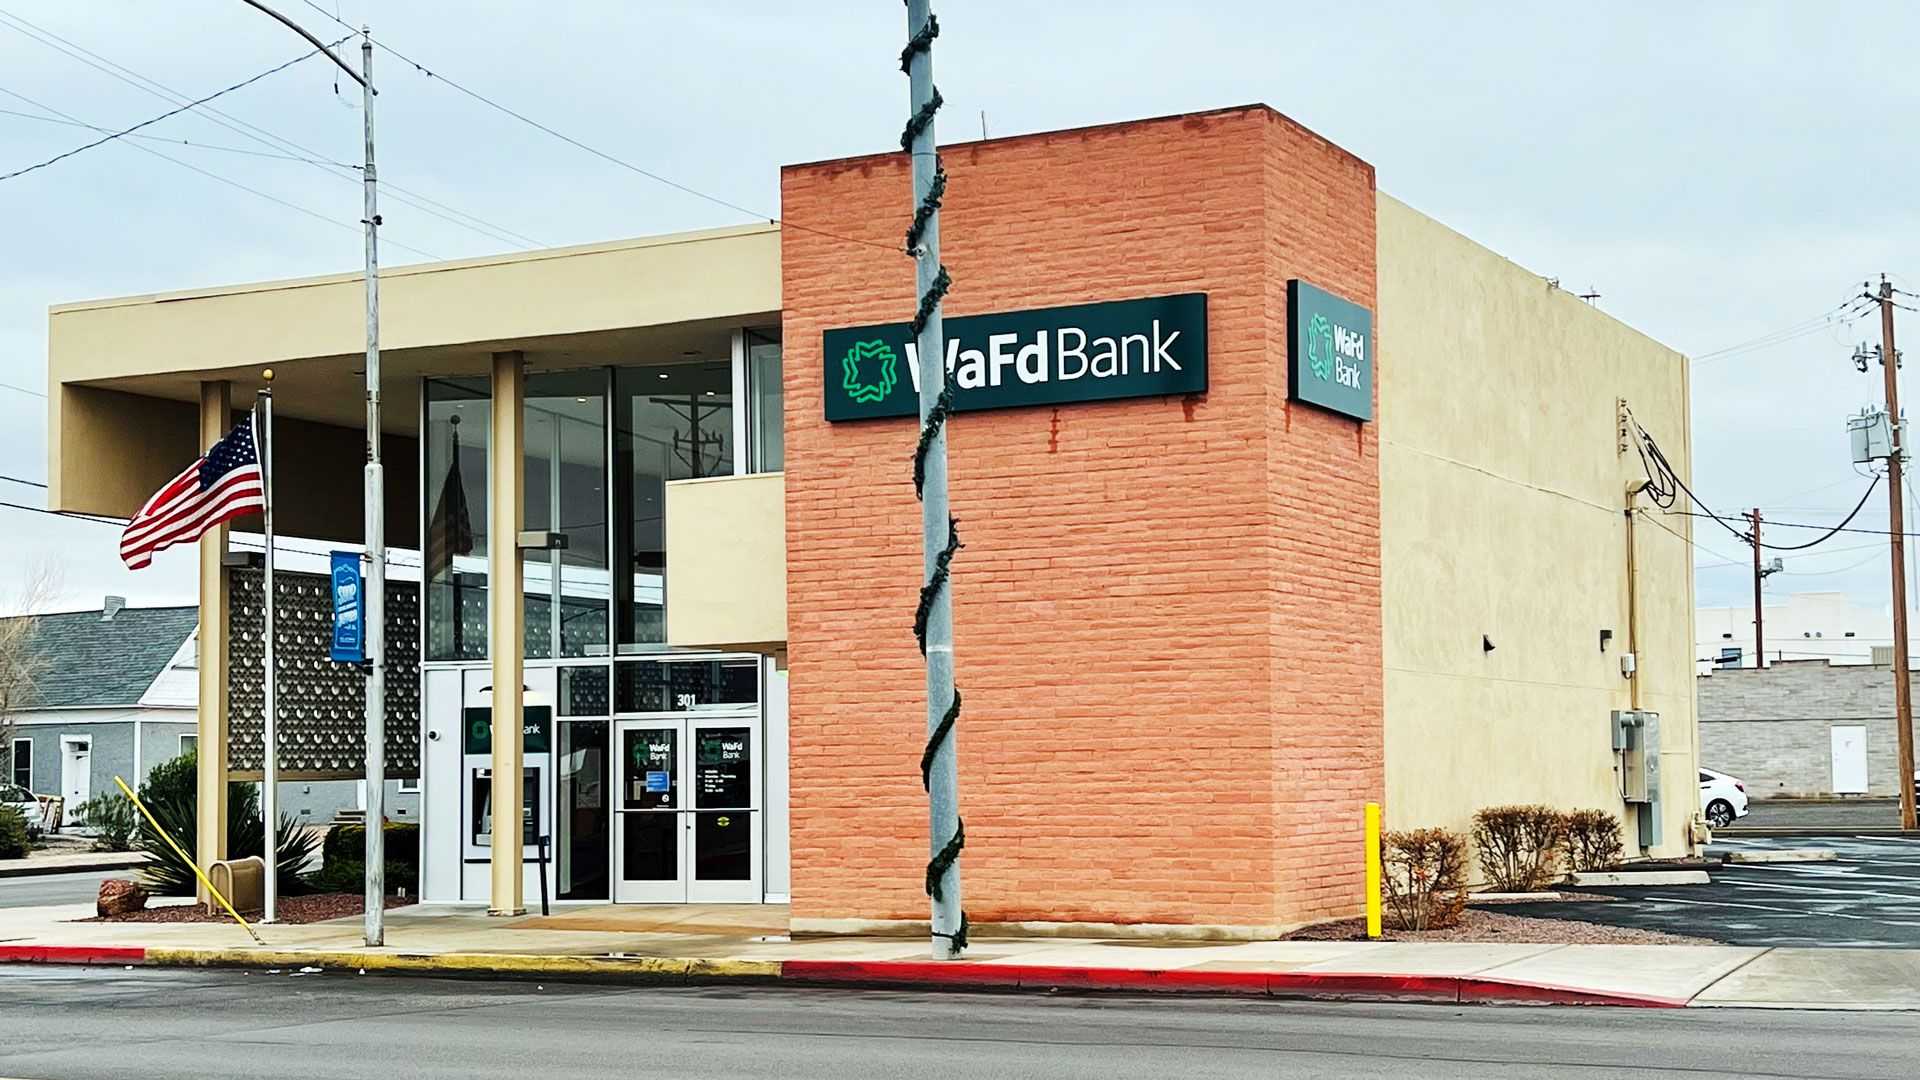 WaFd Bank in Safford, Arizona #1208 - Washington Federal.